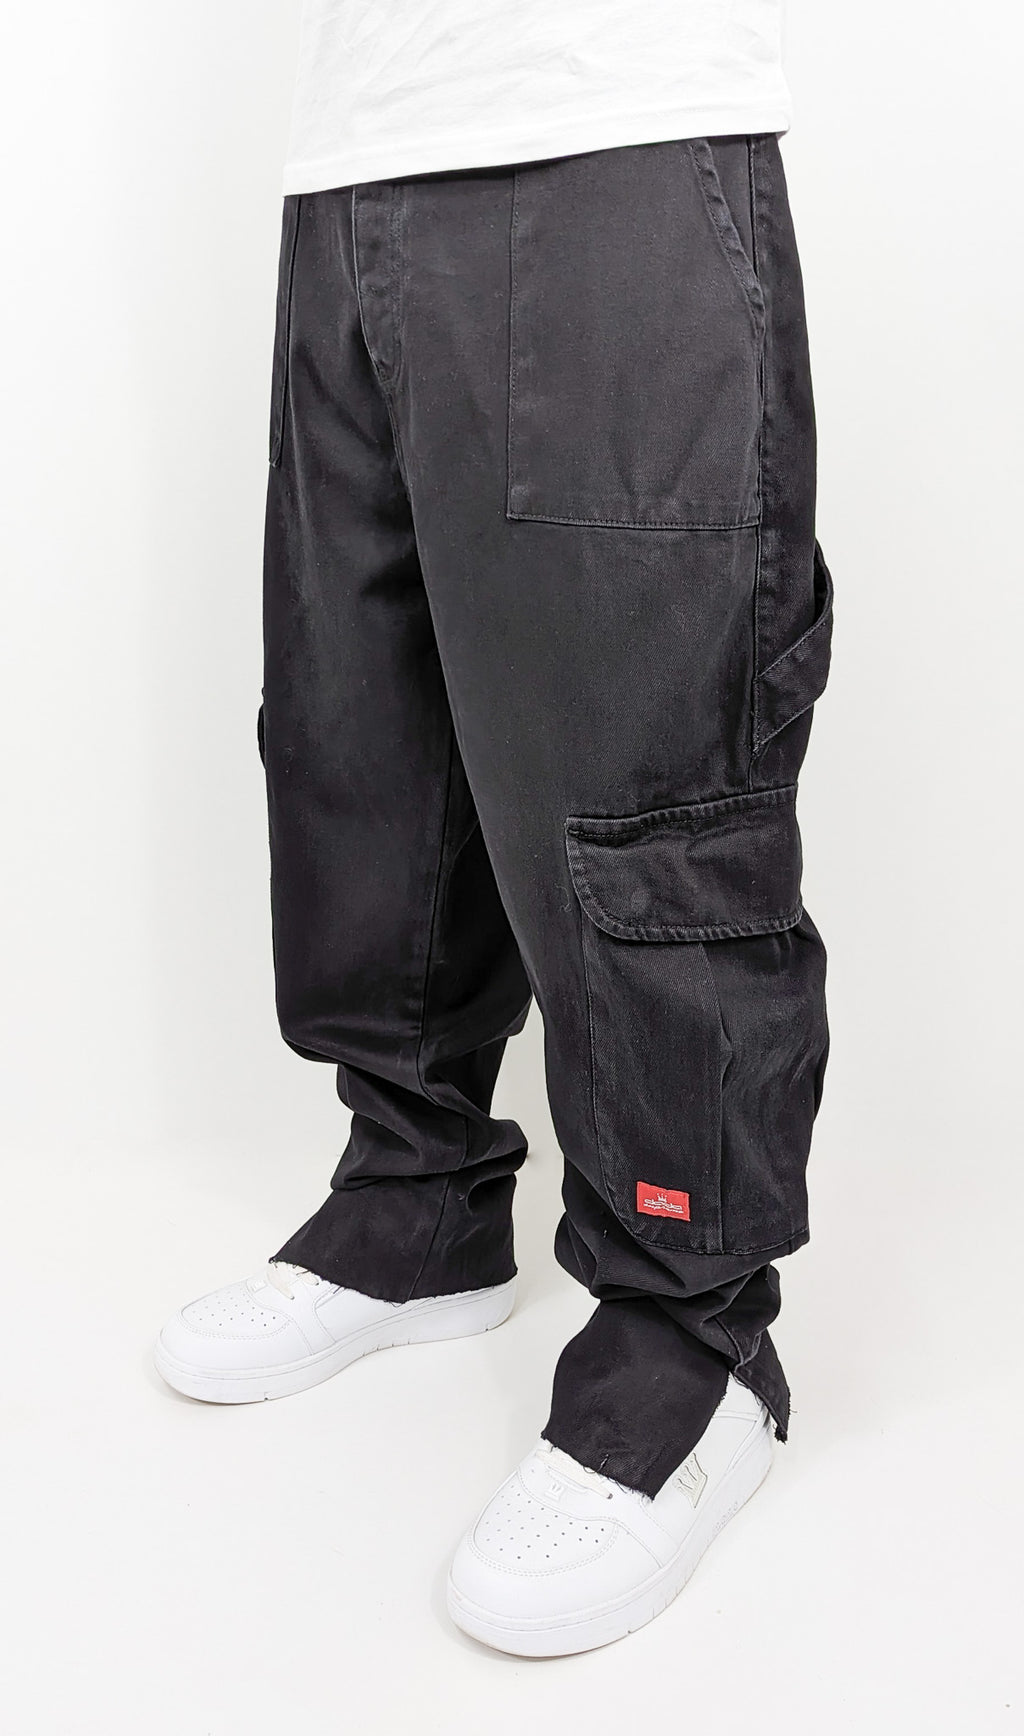 DADA Supreme Cut Off Cargo Baggy Jeans Black - Soulsideshop